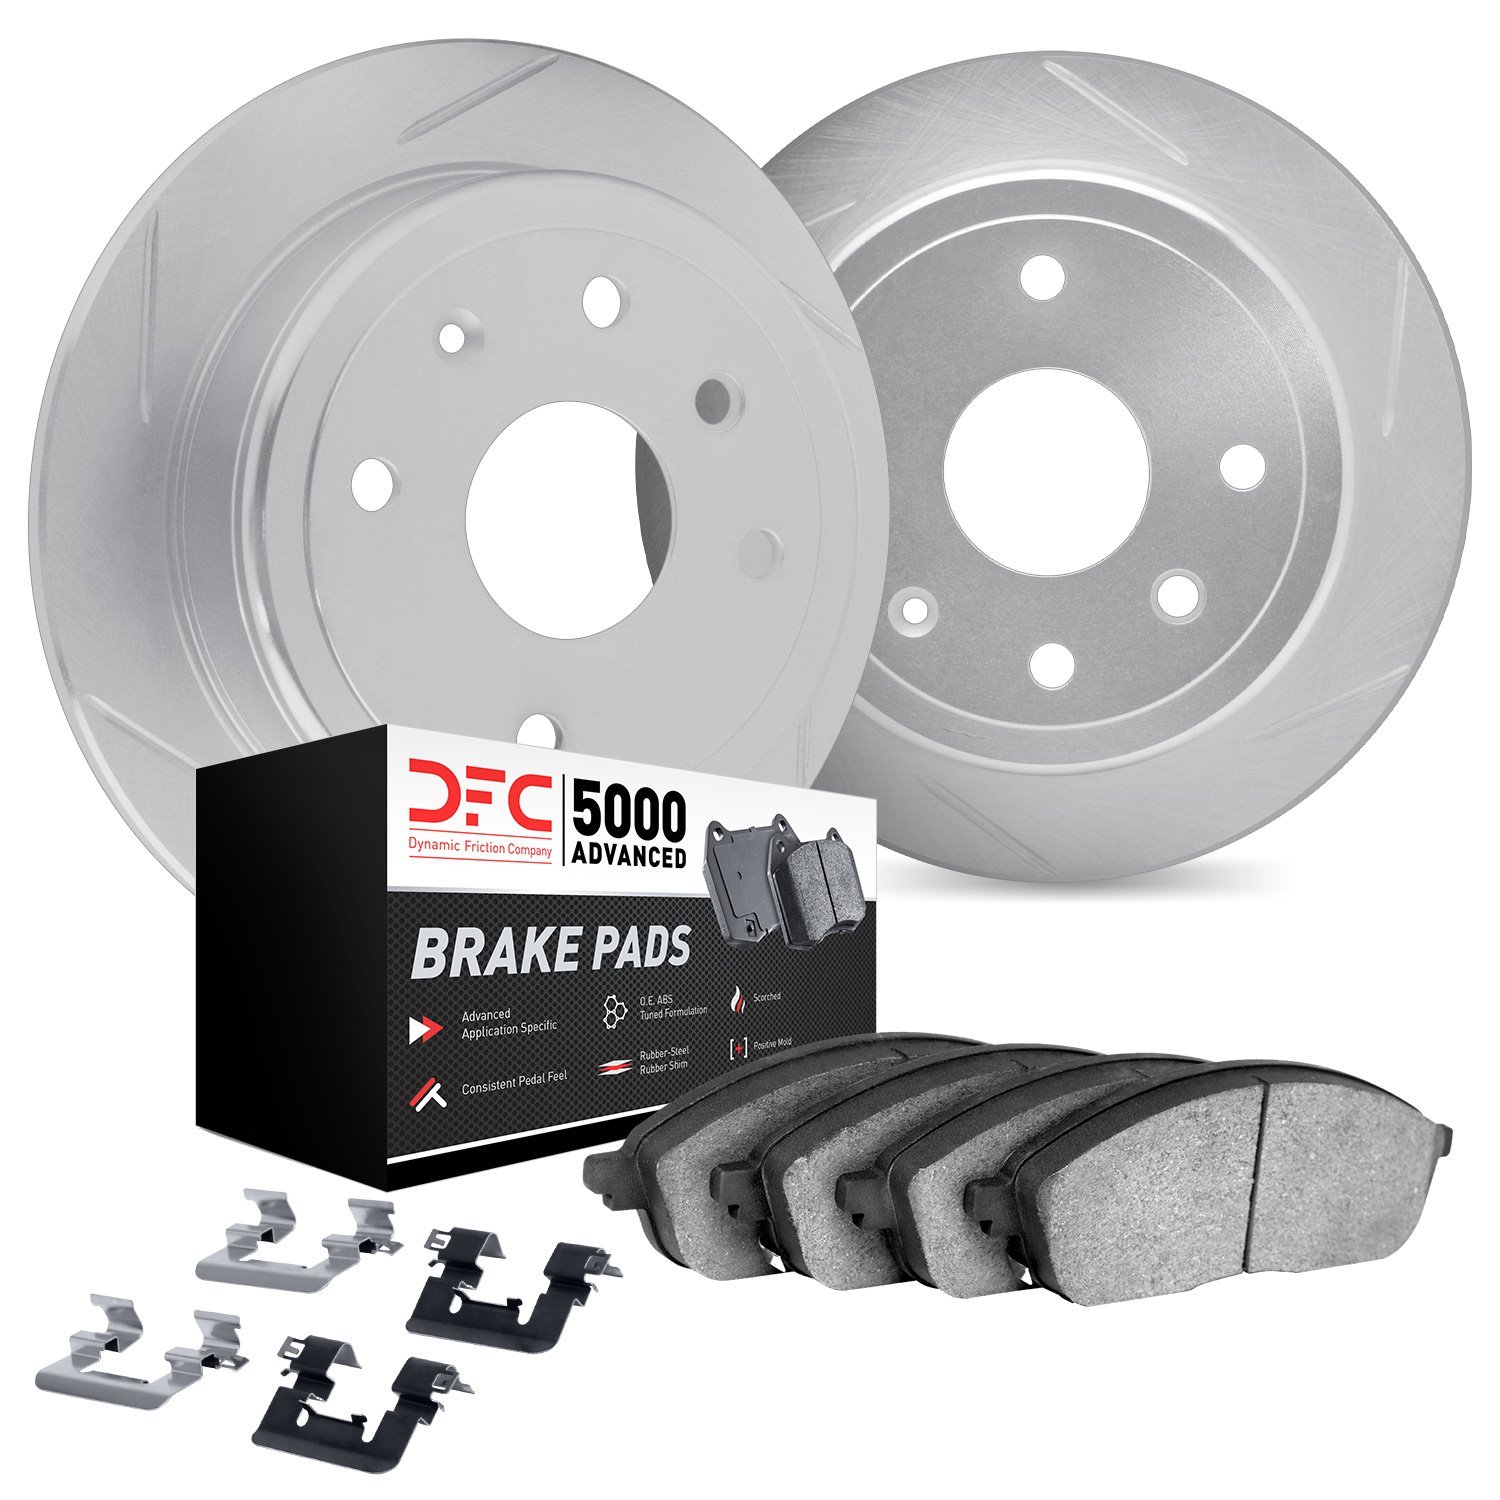 5512-80075 Slotted Brake Rotors w/5000 Advanced Brake Pads Kit & Hardware [Silver], 2013-2015 Ford/Lincoln/Mercury/Mazda, Positi